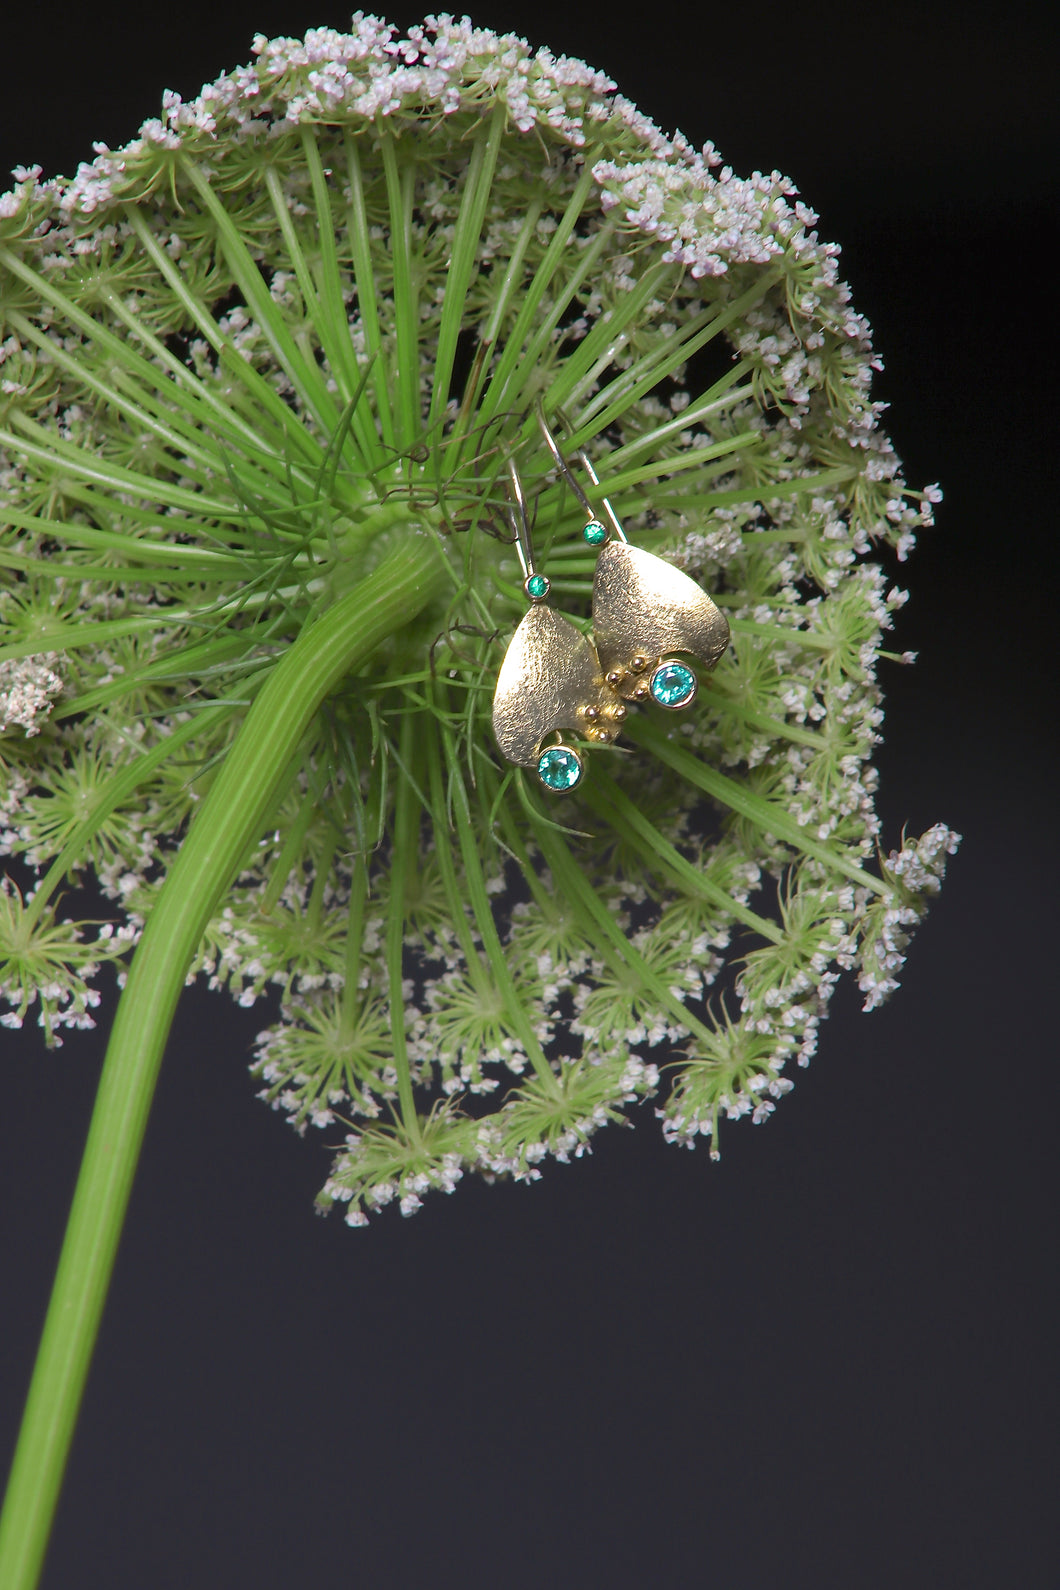 Emerald Petal Earrings (09419)